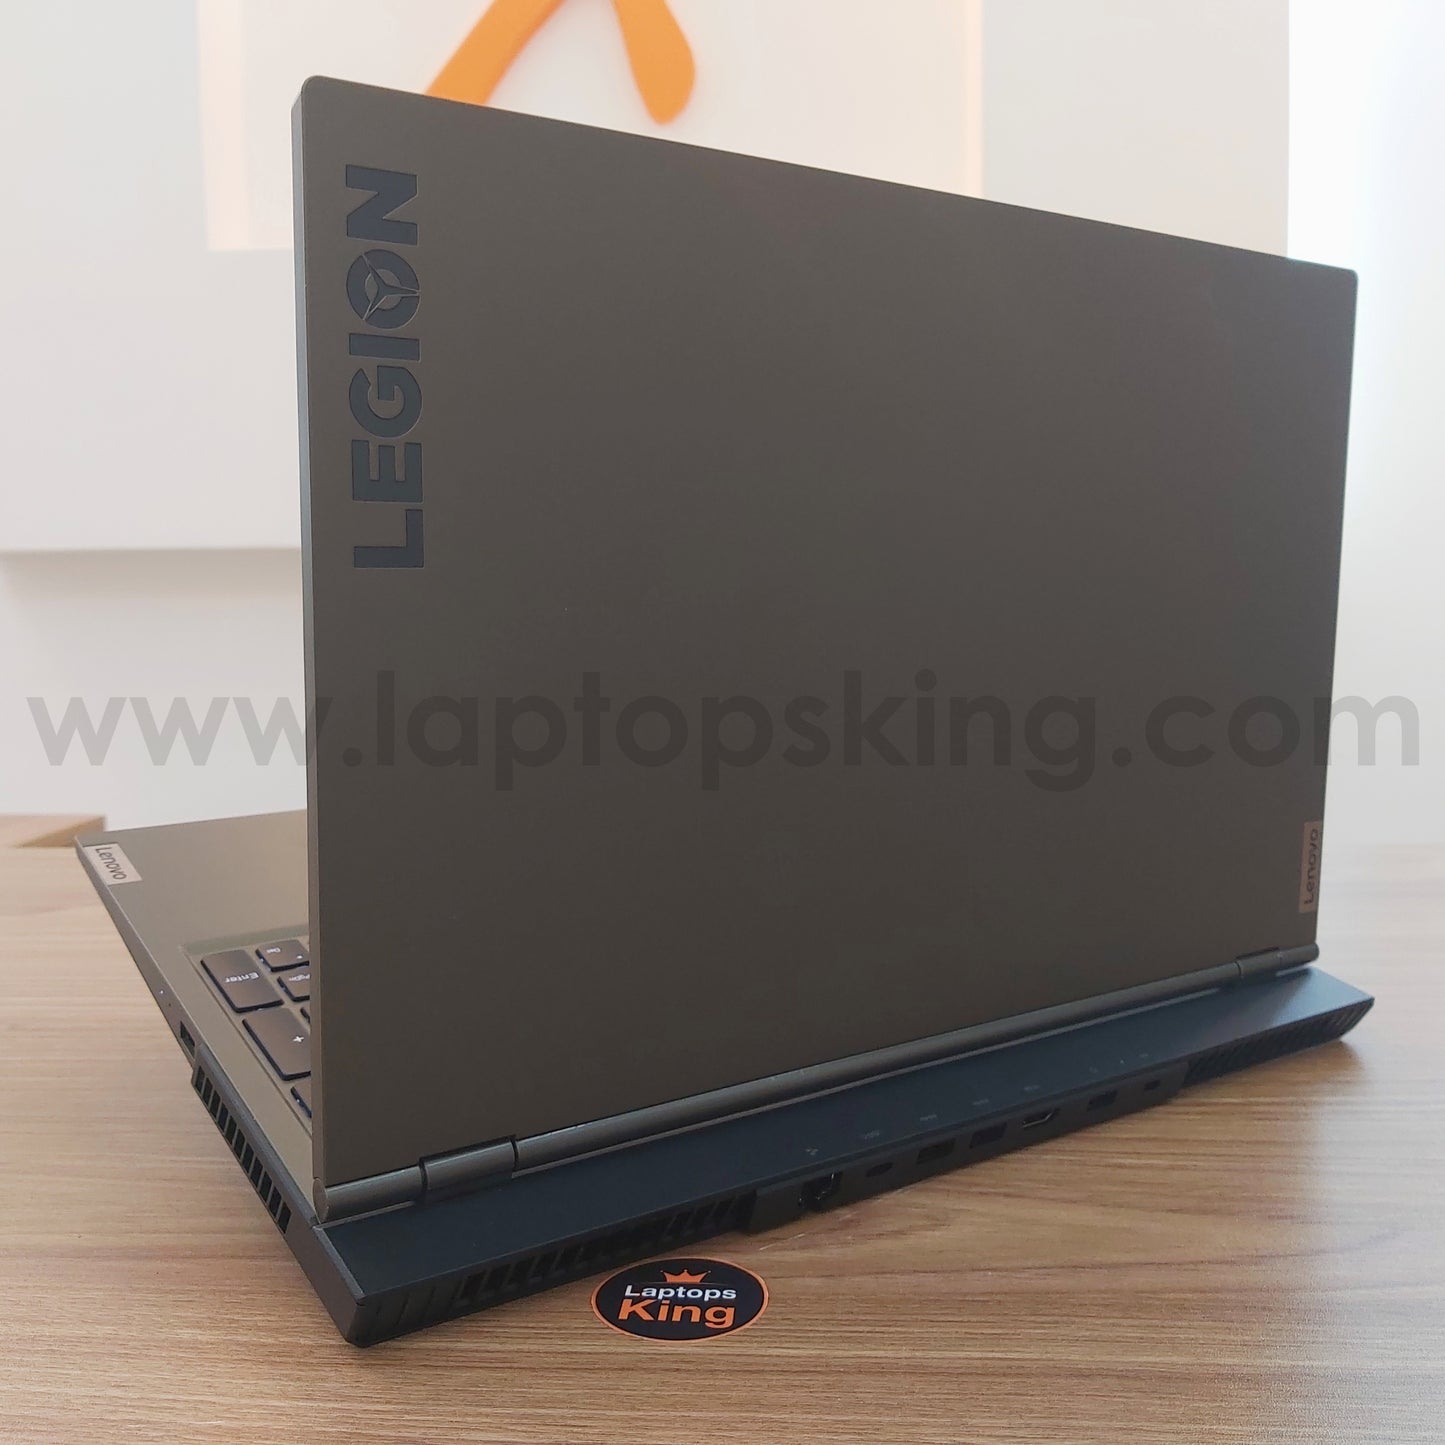 Lenovo Legion 5 i7-10750H GTX 1660 Ti Gaming Laptop (Open Box)